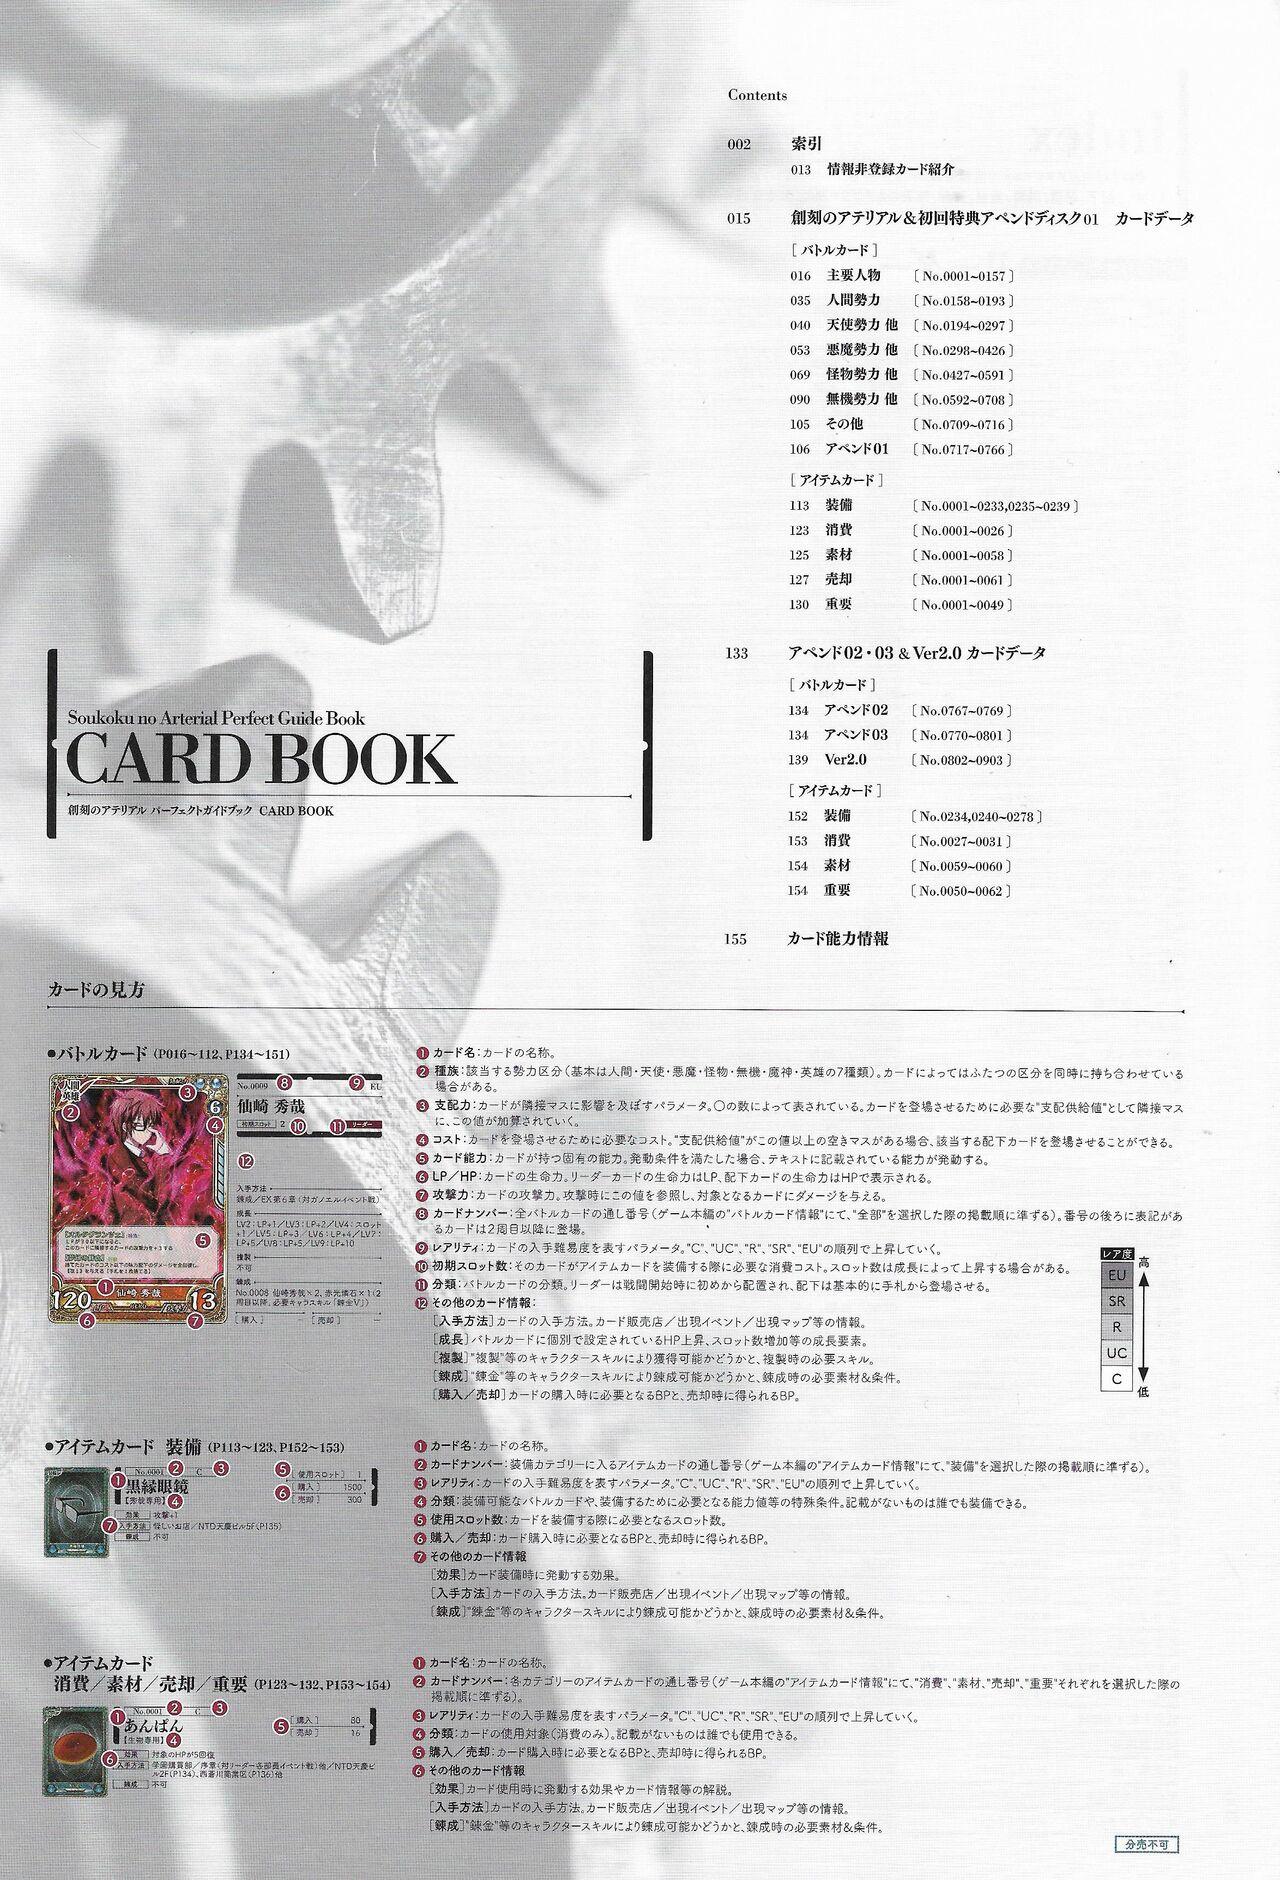 Soukoku no Arterial Perfect Guidebook 211